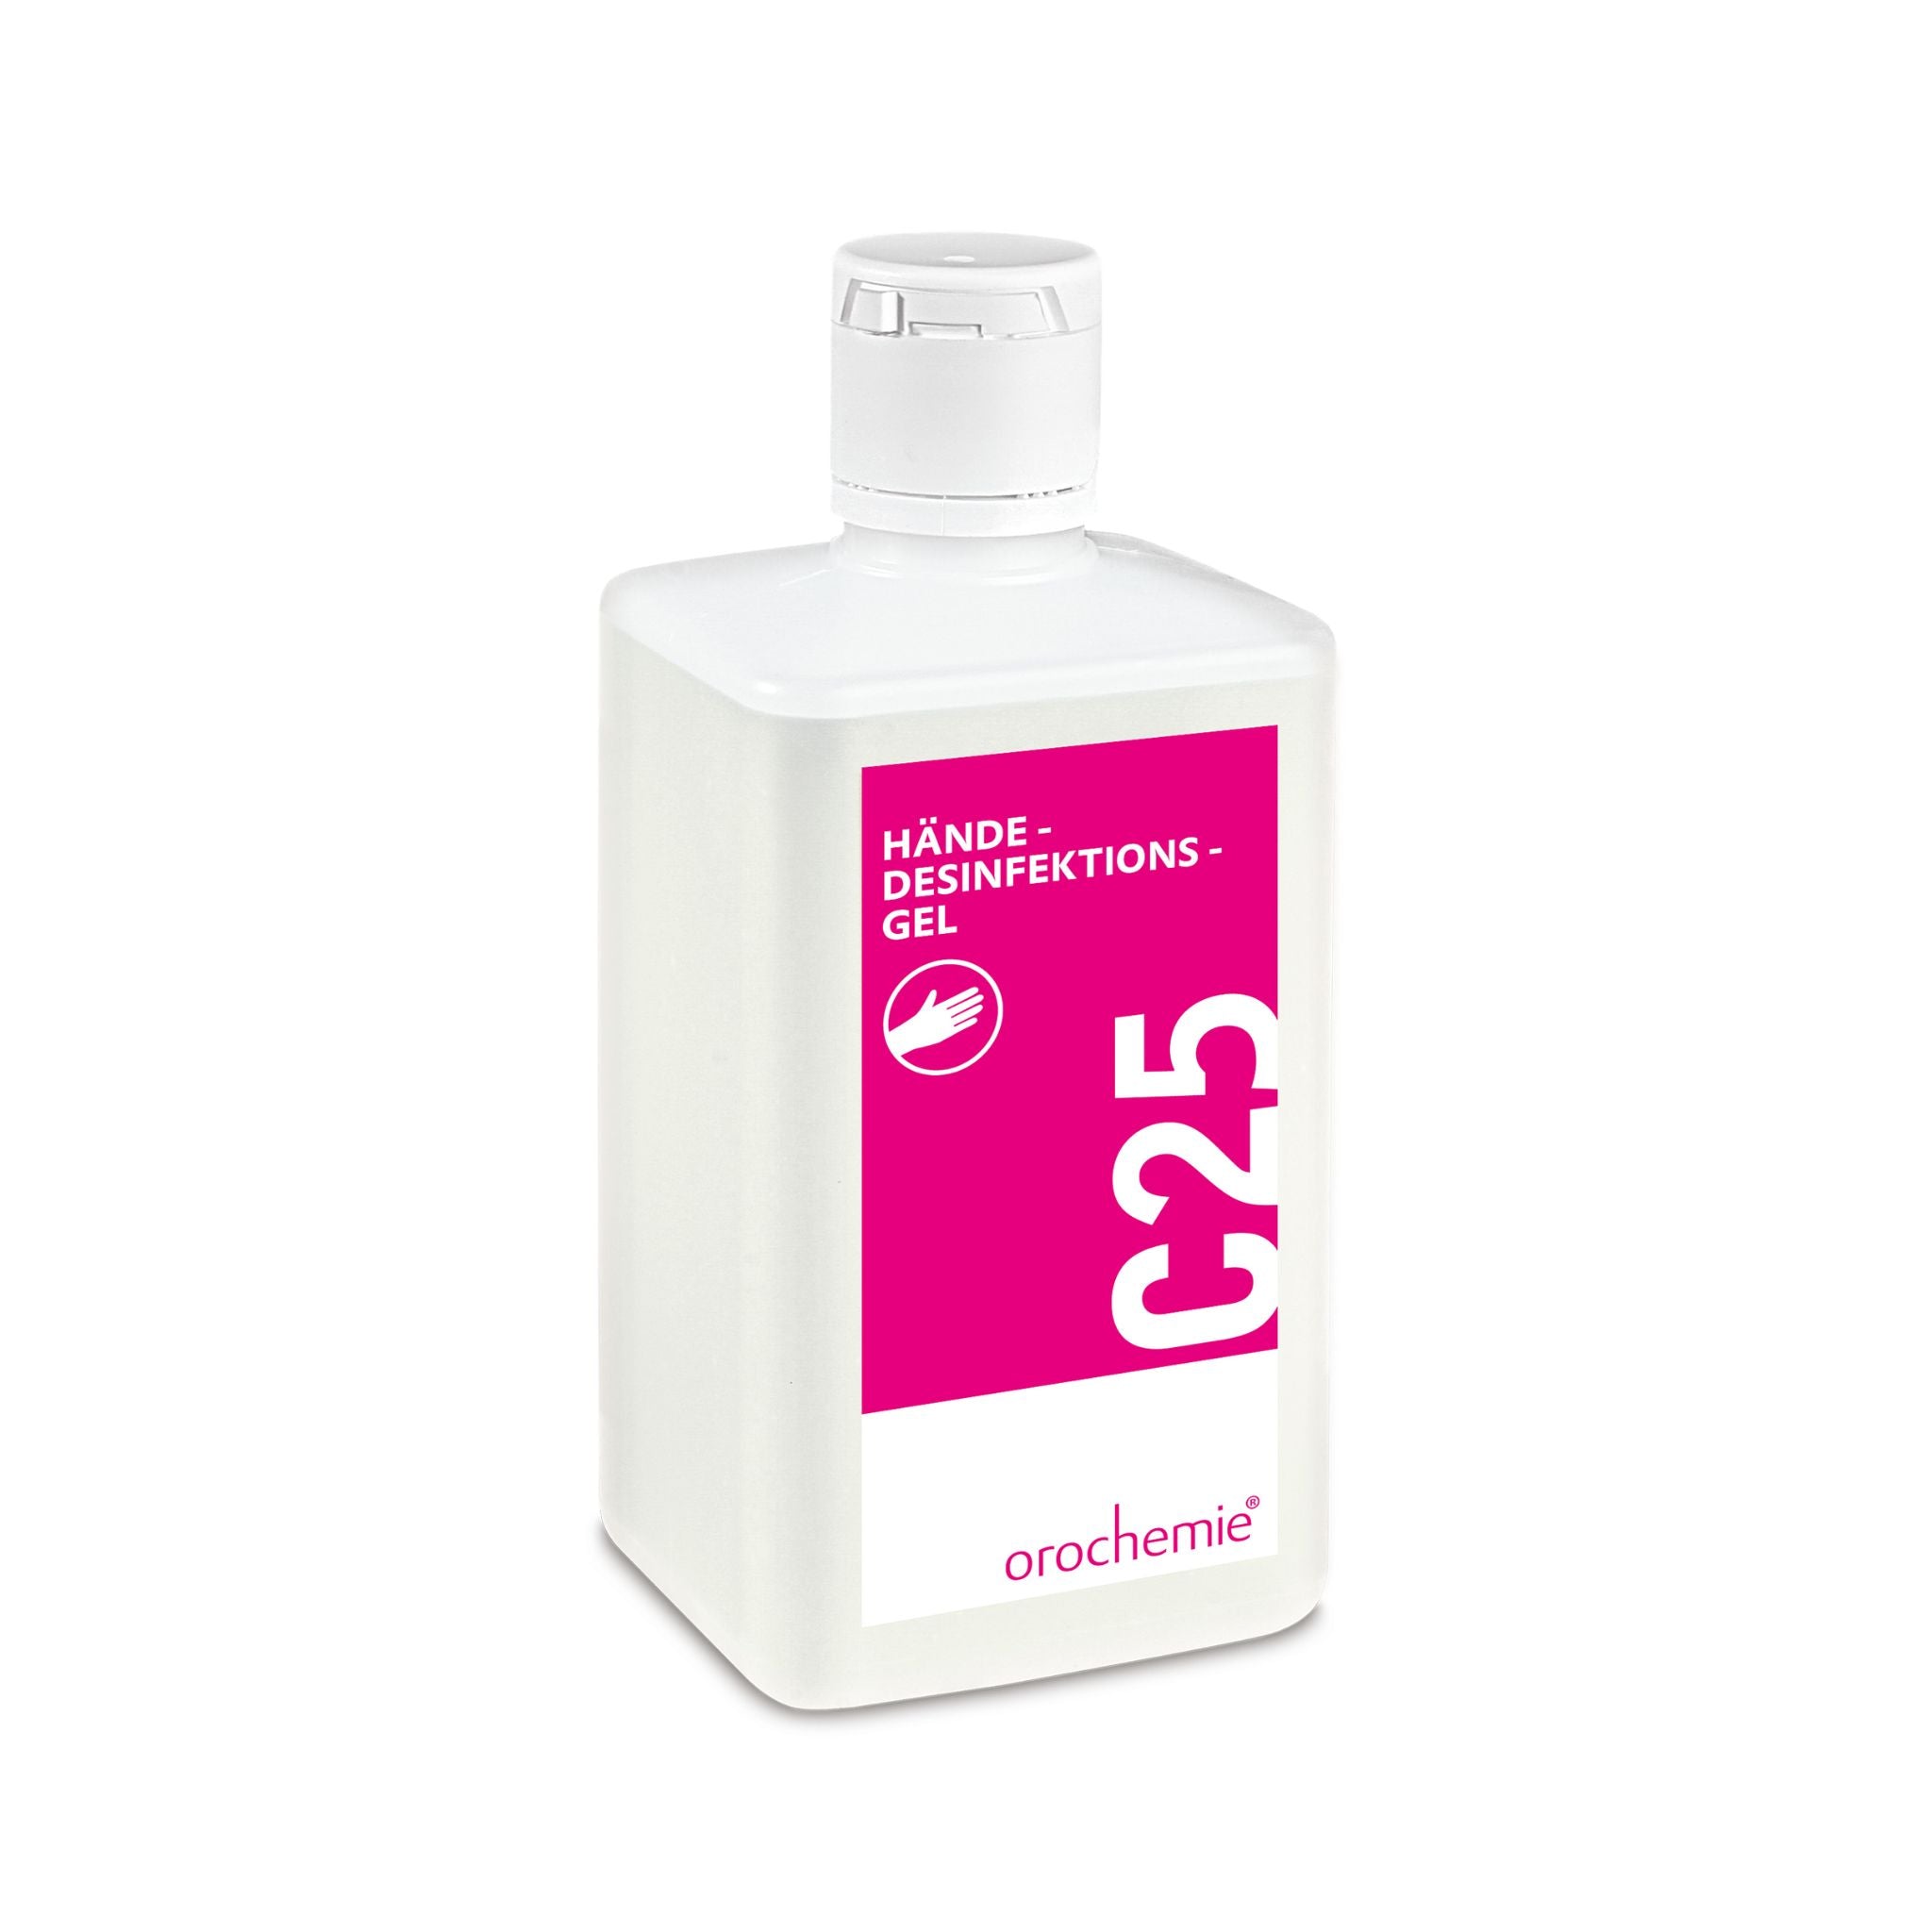 Orochemie C25 hand disinfectant gel - 0